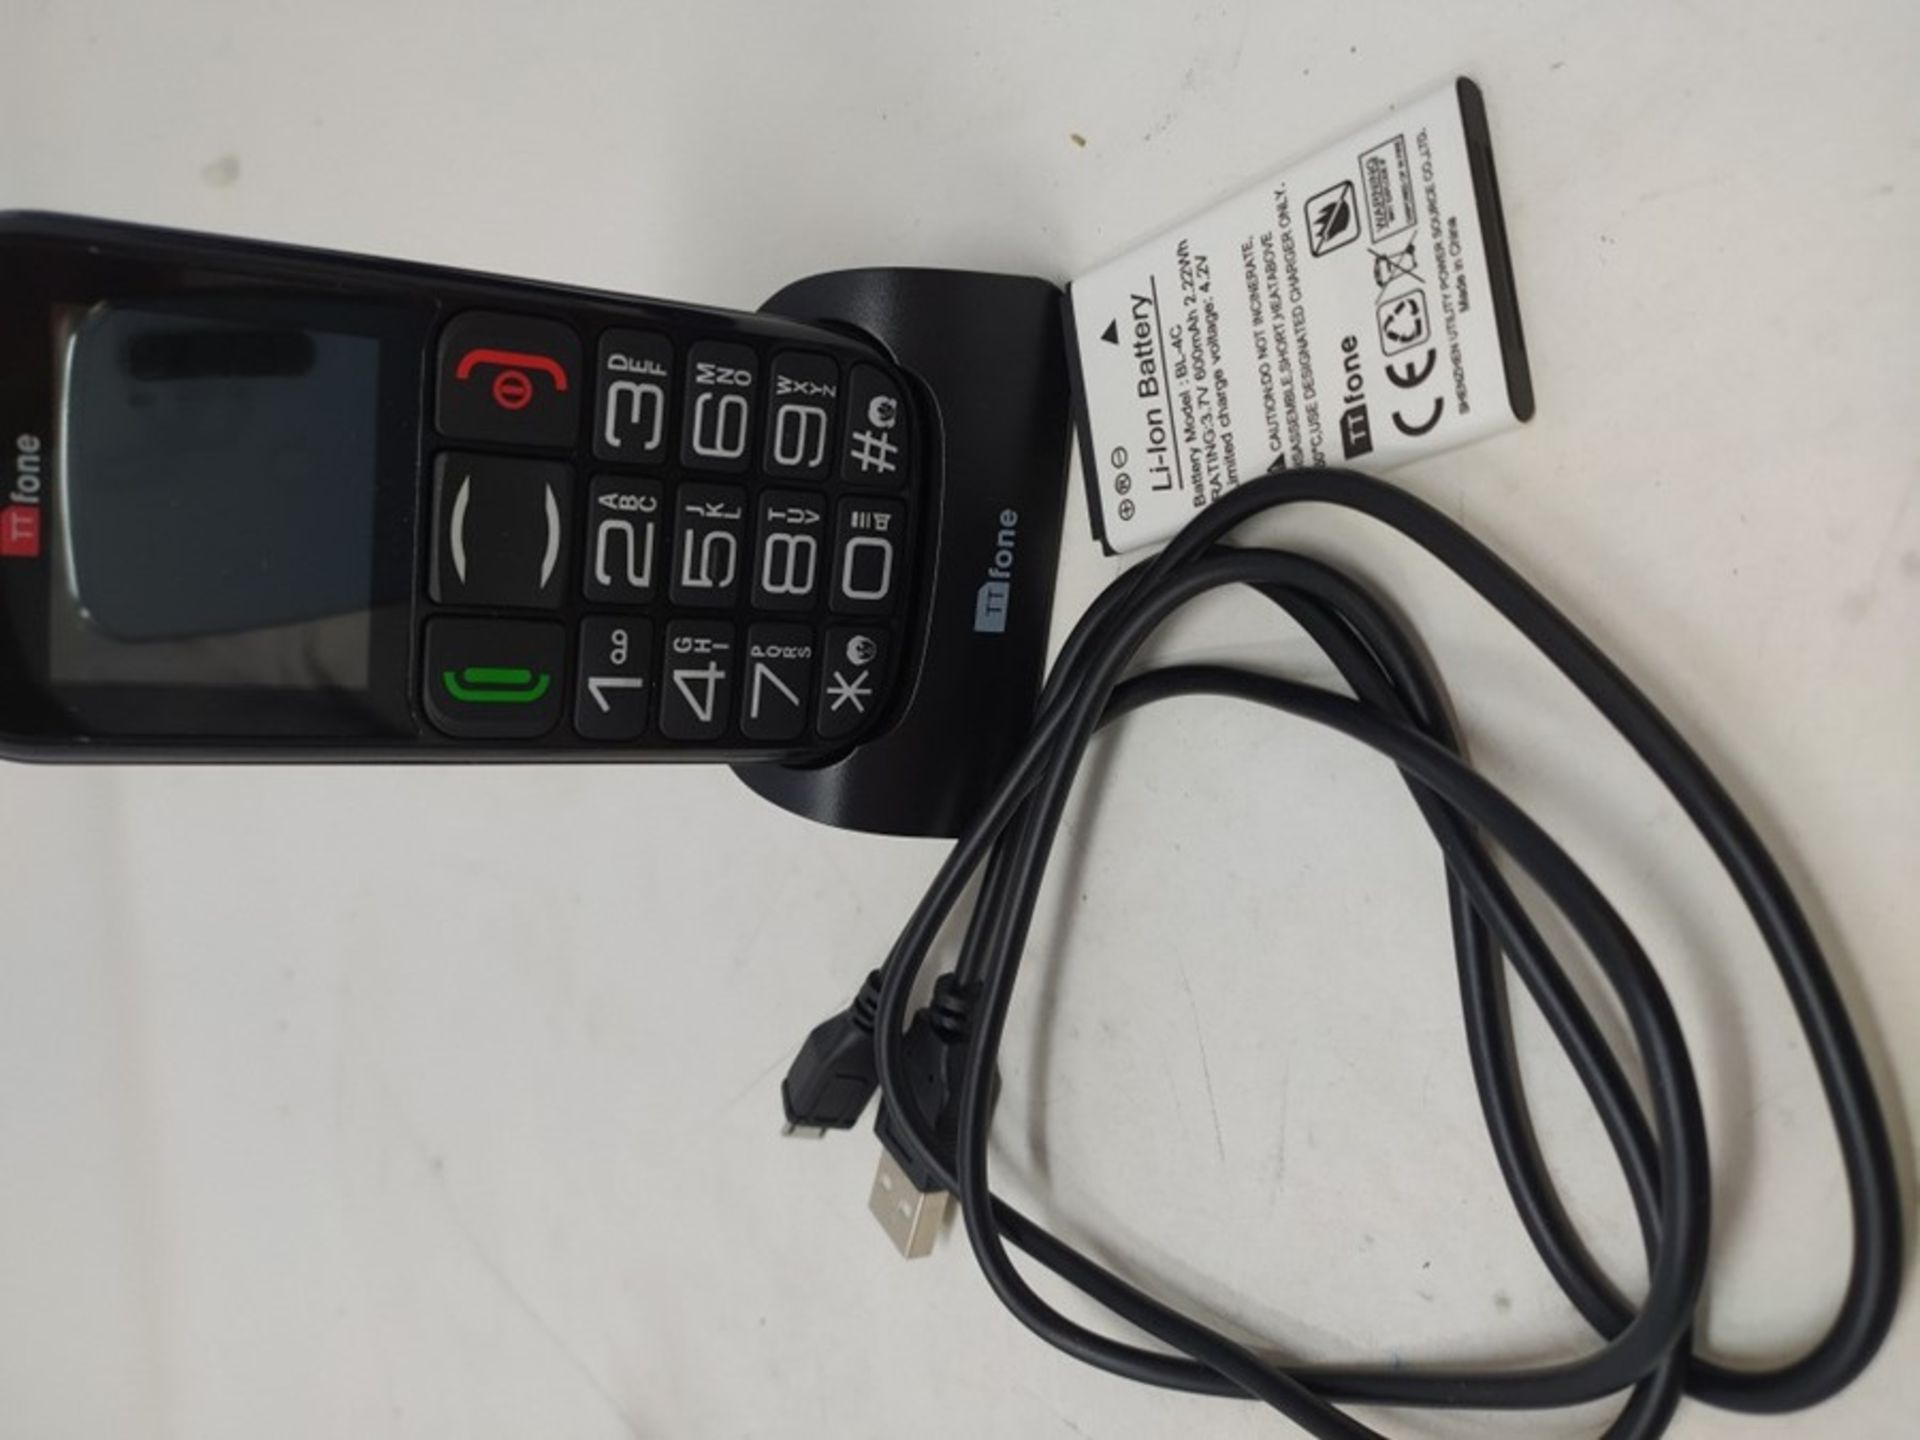 TTfone Mercury 2 Big Button Basic Senior Unlocked Sim Free Mobile Phone with Dock - Bl - Image 2 of 2